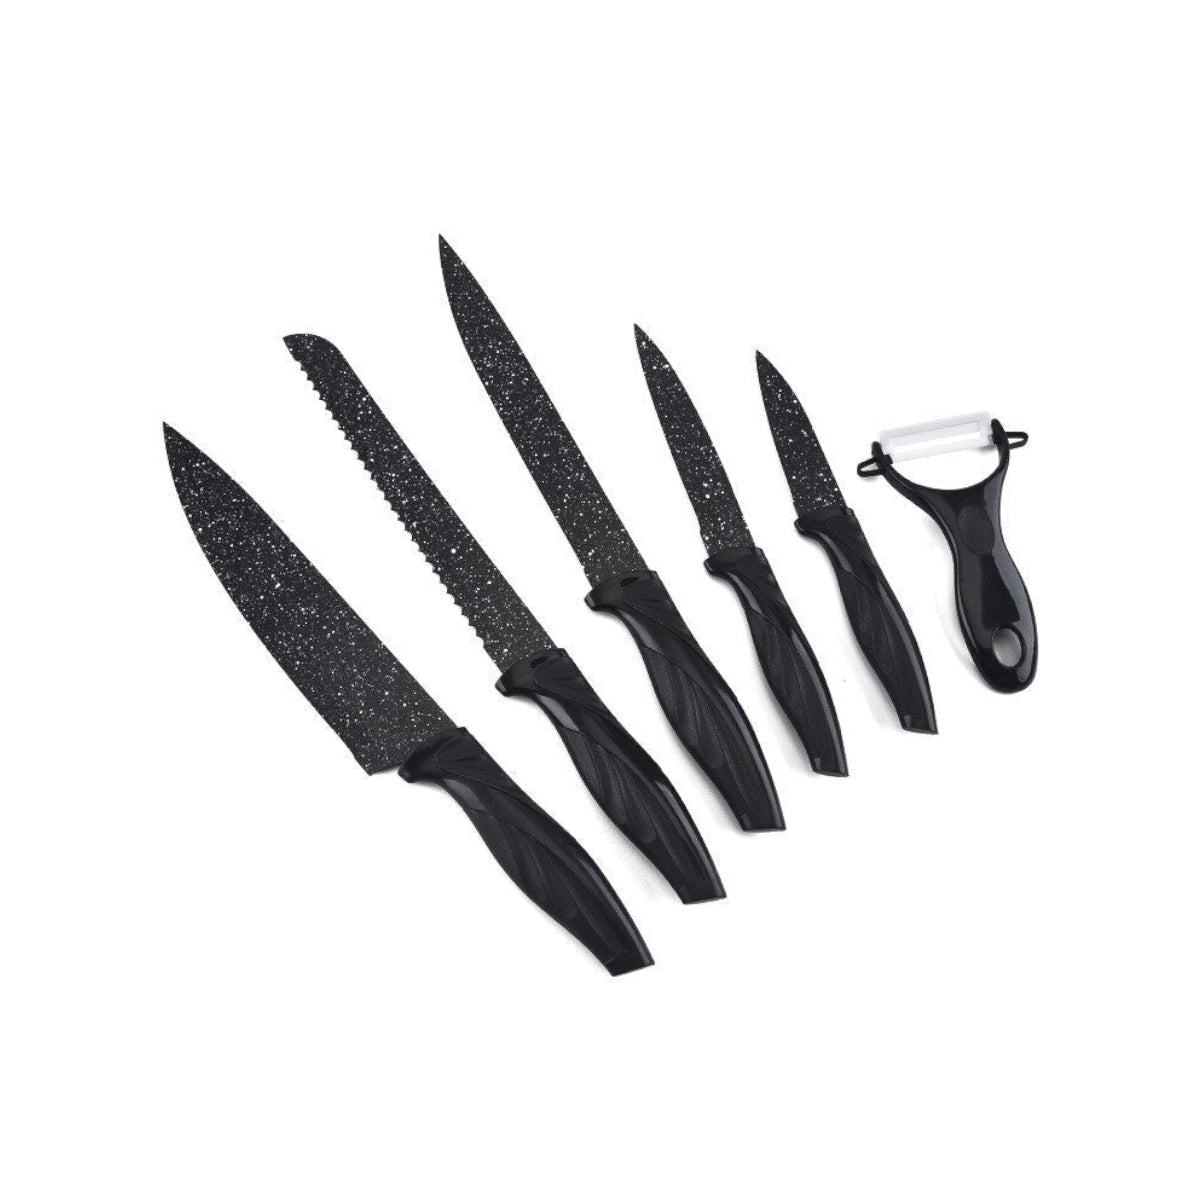 Stainless Steel Kitchen 6 Piece Knife Set